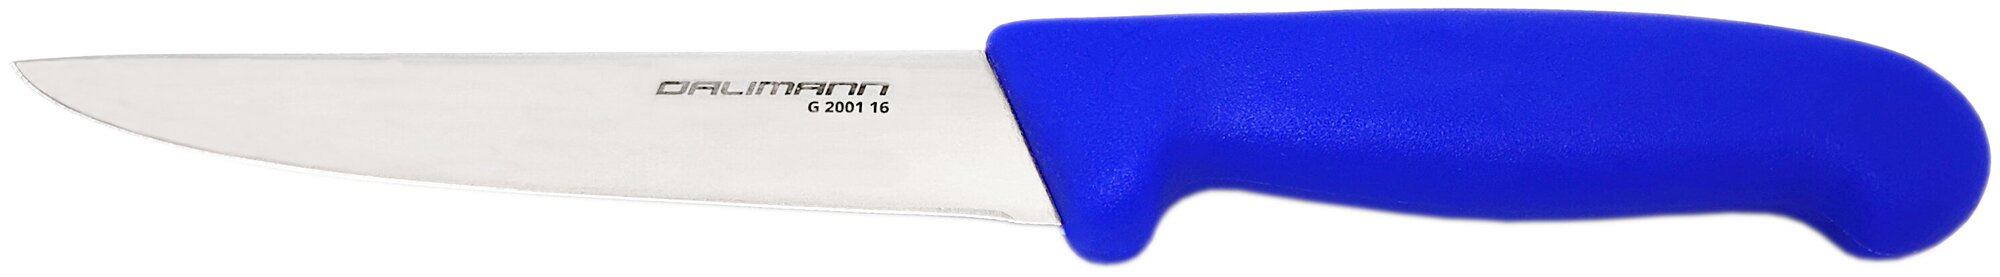 Разделочный нож Dalimann, G-2001 (bl), 16 см